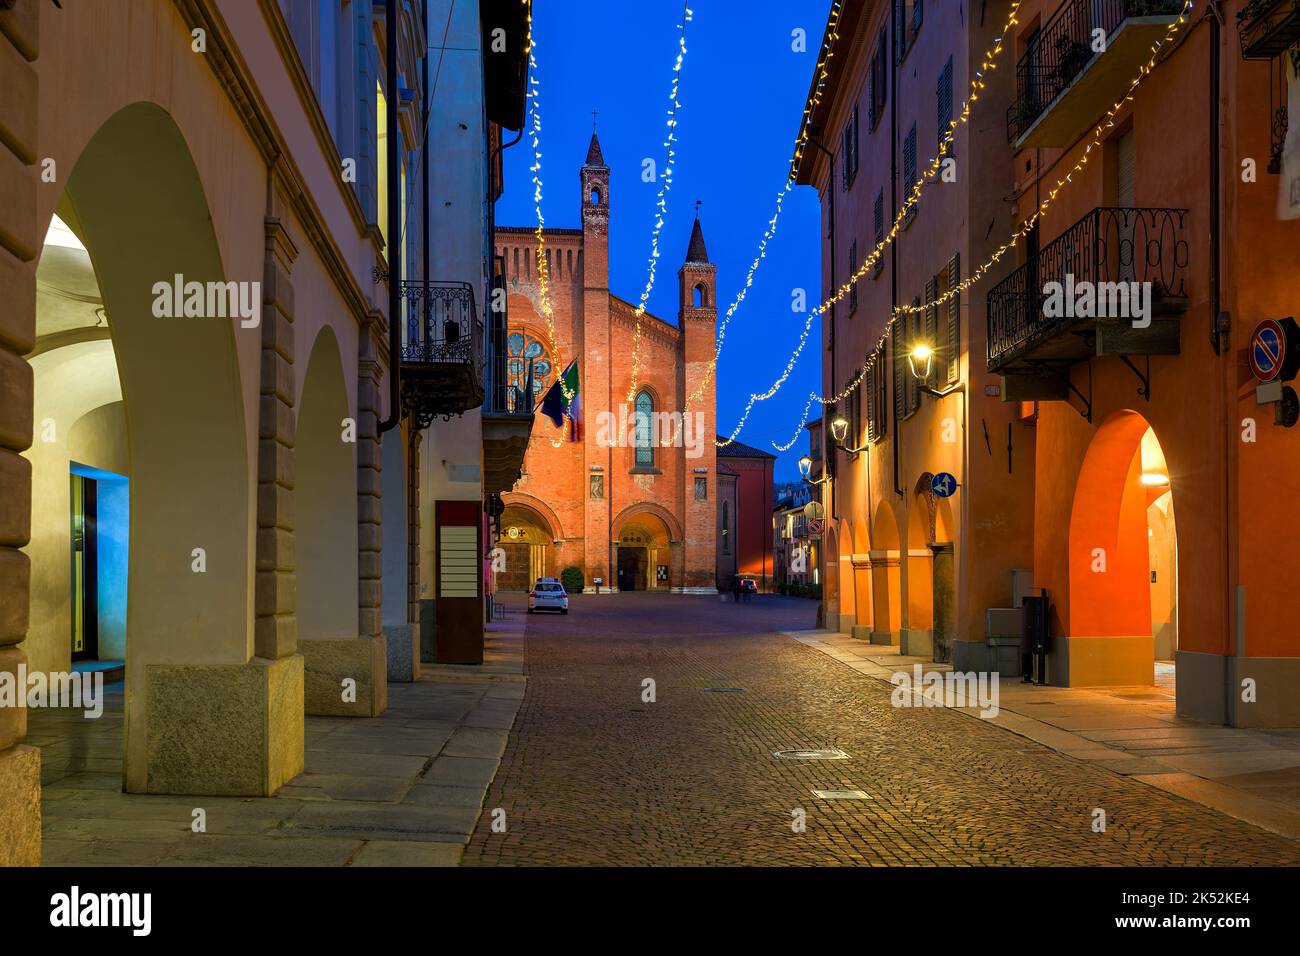 Narrow cobblestone street among old historic buildings illuminated with Christmas lights in Alba, Italy. Stock Photo